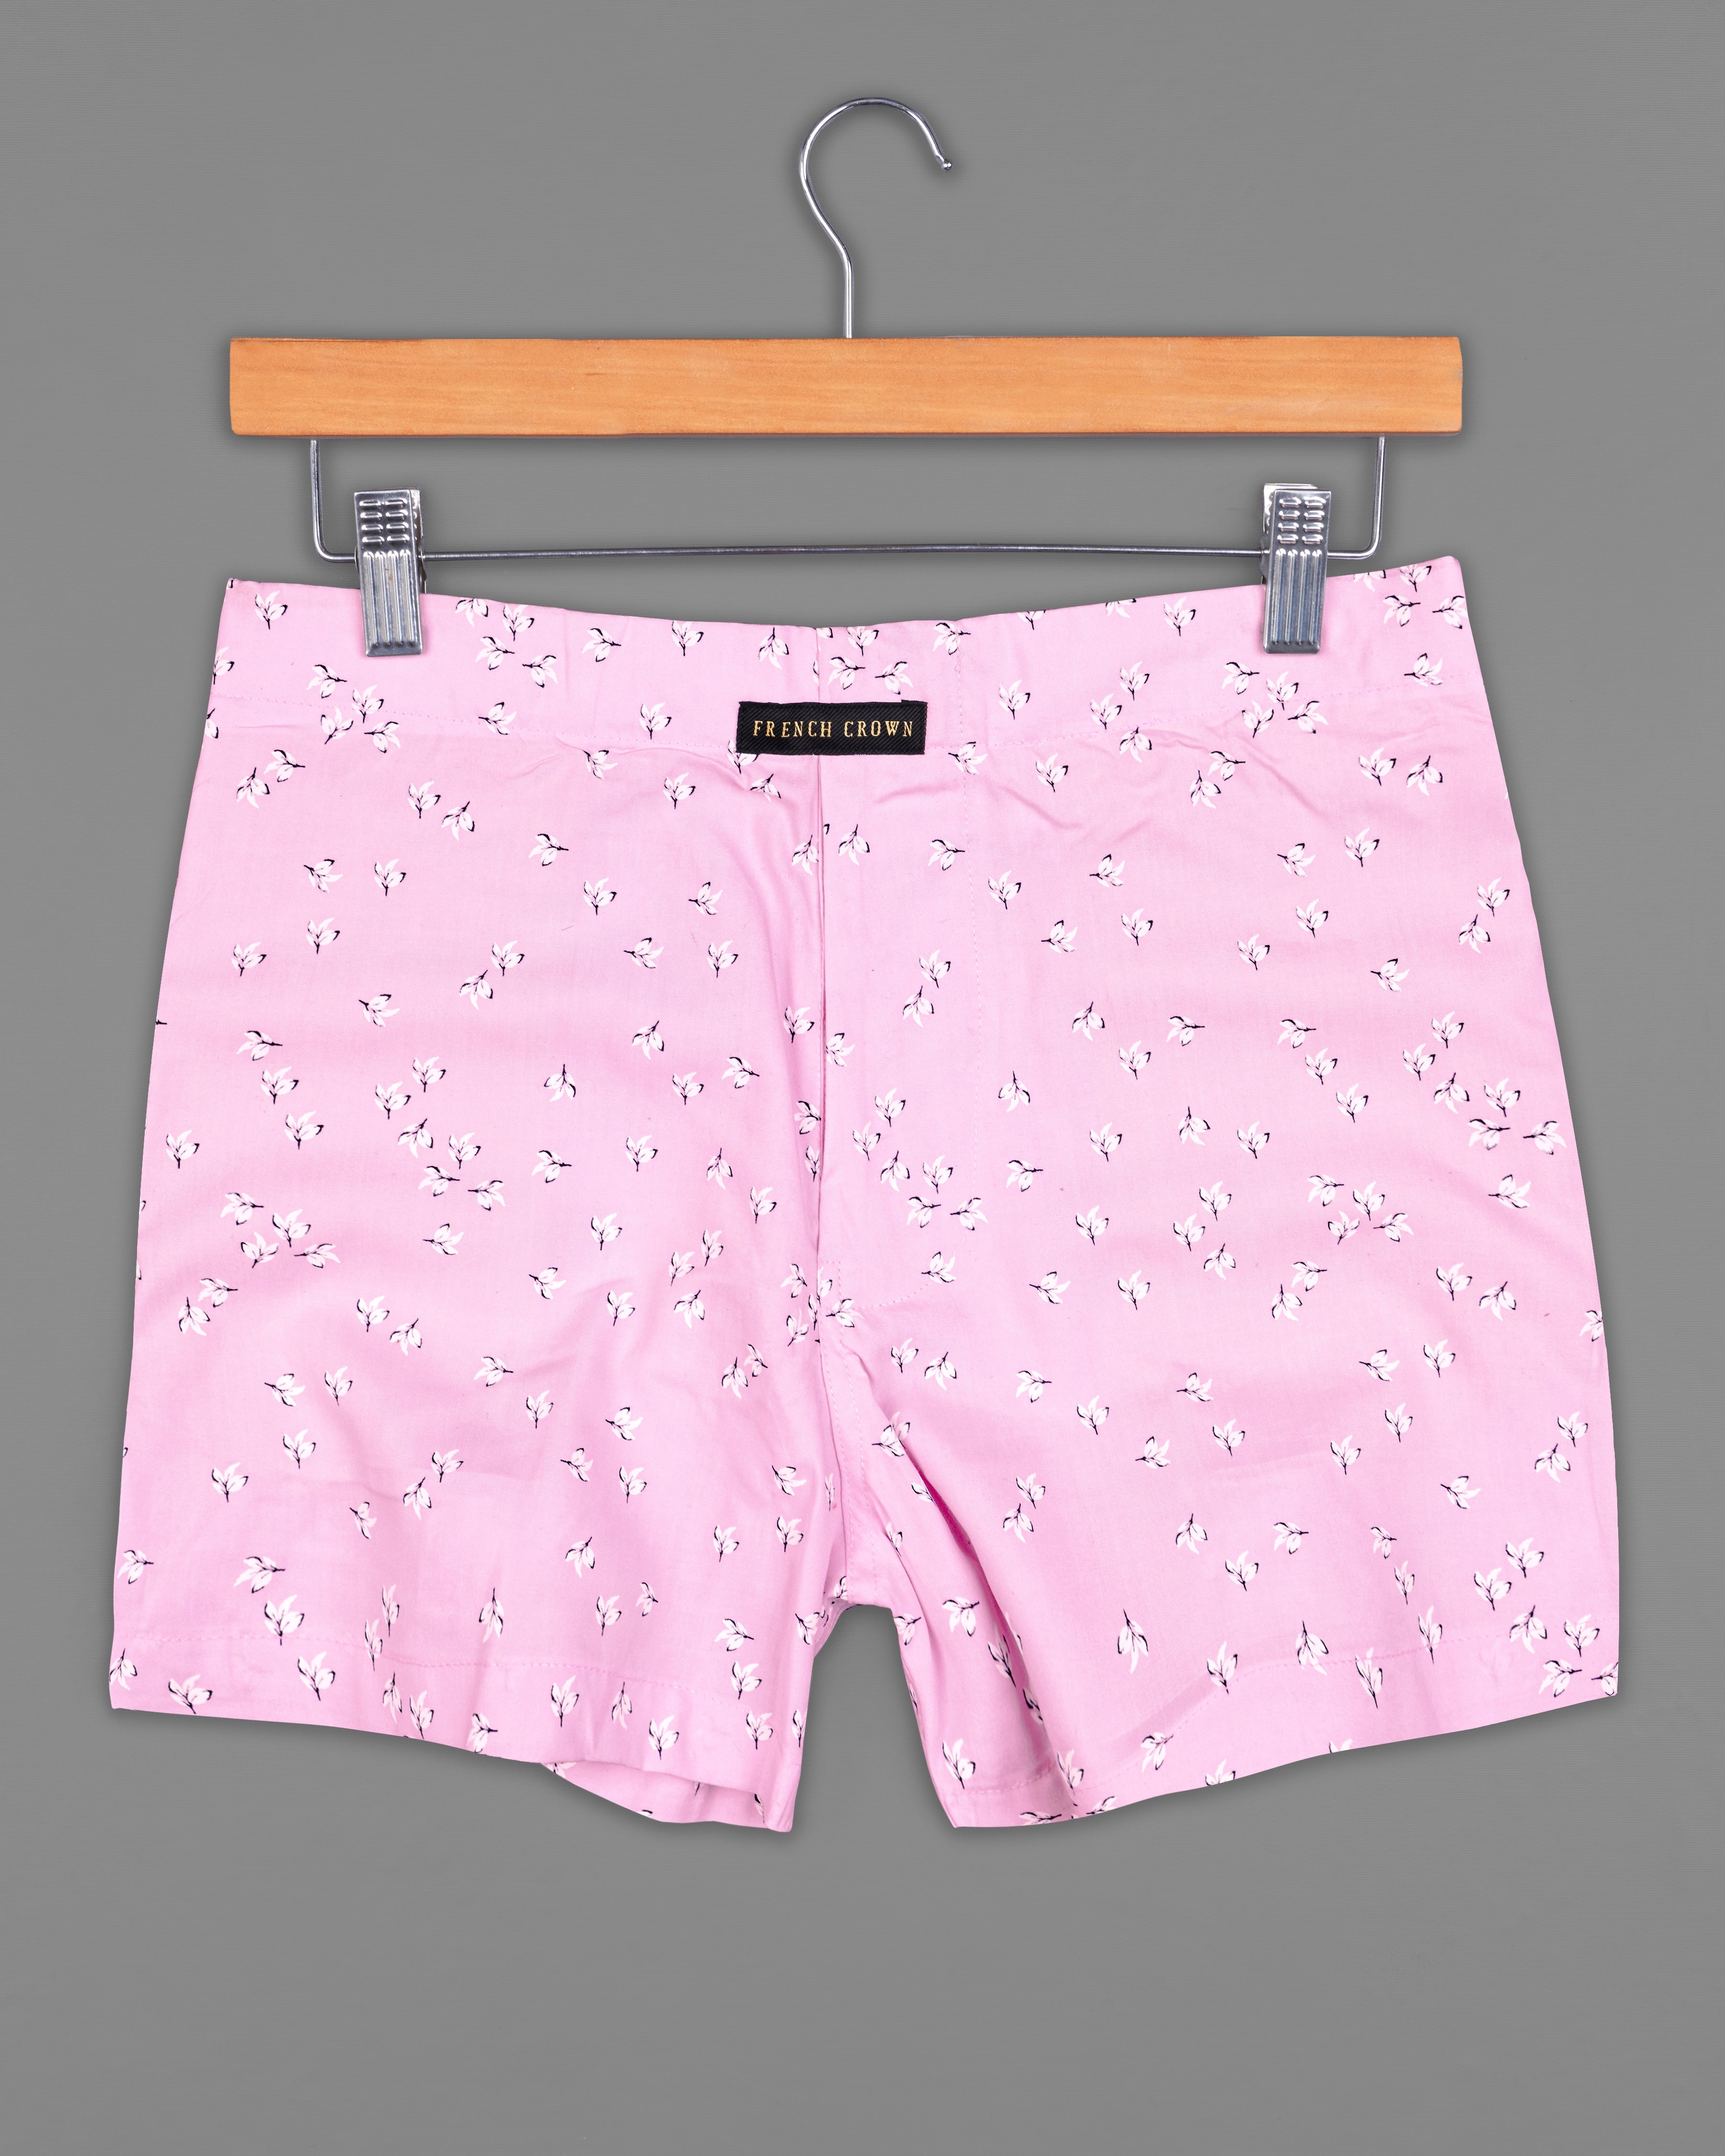 Chantilly Pink Printed Premium Cotton Boxers BX468-28, BX468-30, BX468-32, BX468-34, BX468-36, BX468-38, BX468-40, BX468-42, BX468-44